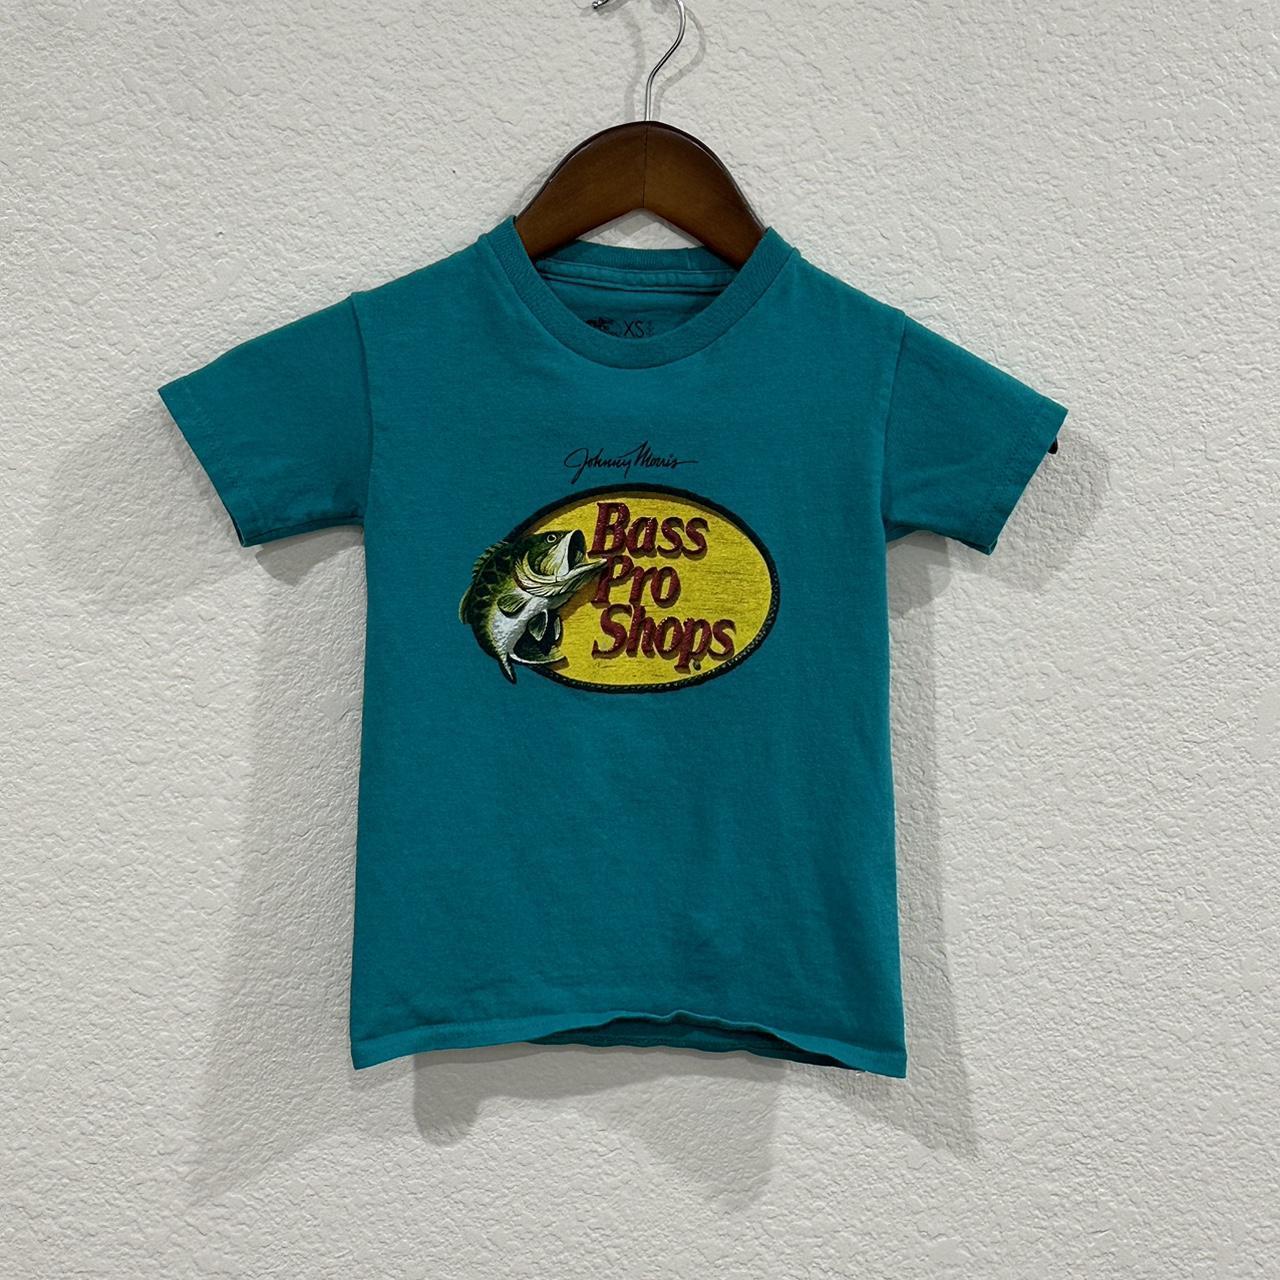 Bass Pro Shops Kids' T-Shirt - Multi